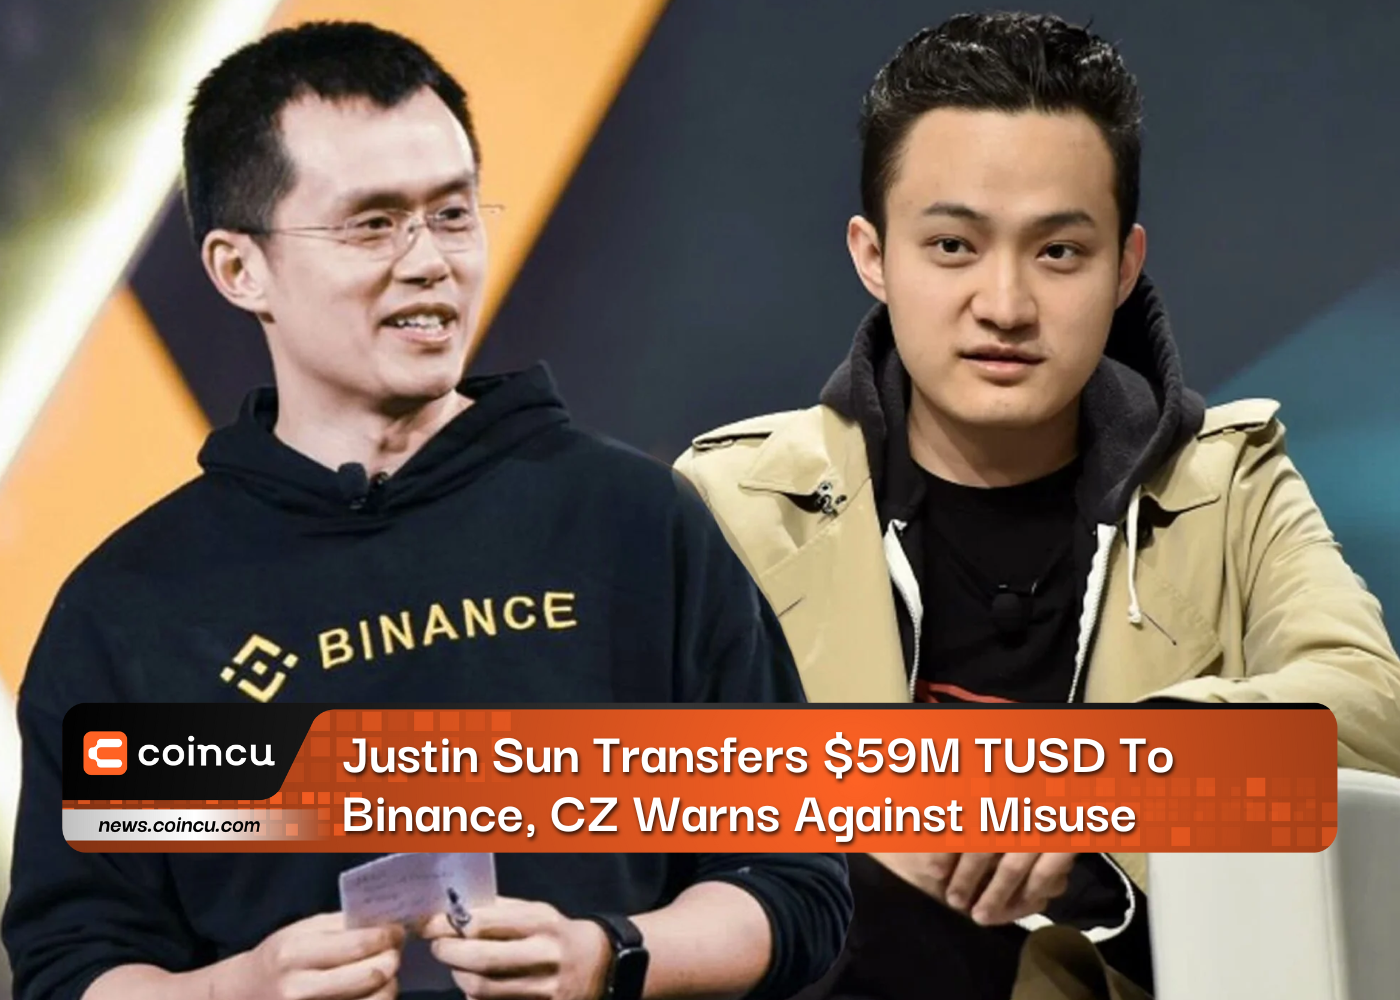 Justin Sun Transfers $59M TUSD To Binance, CZ Warns Against Misuse